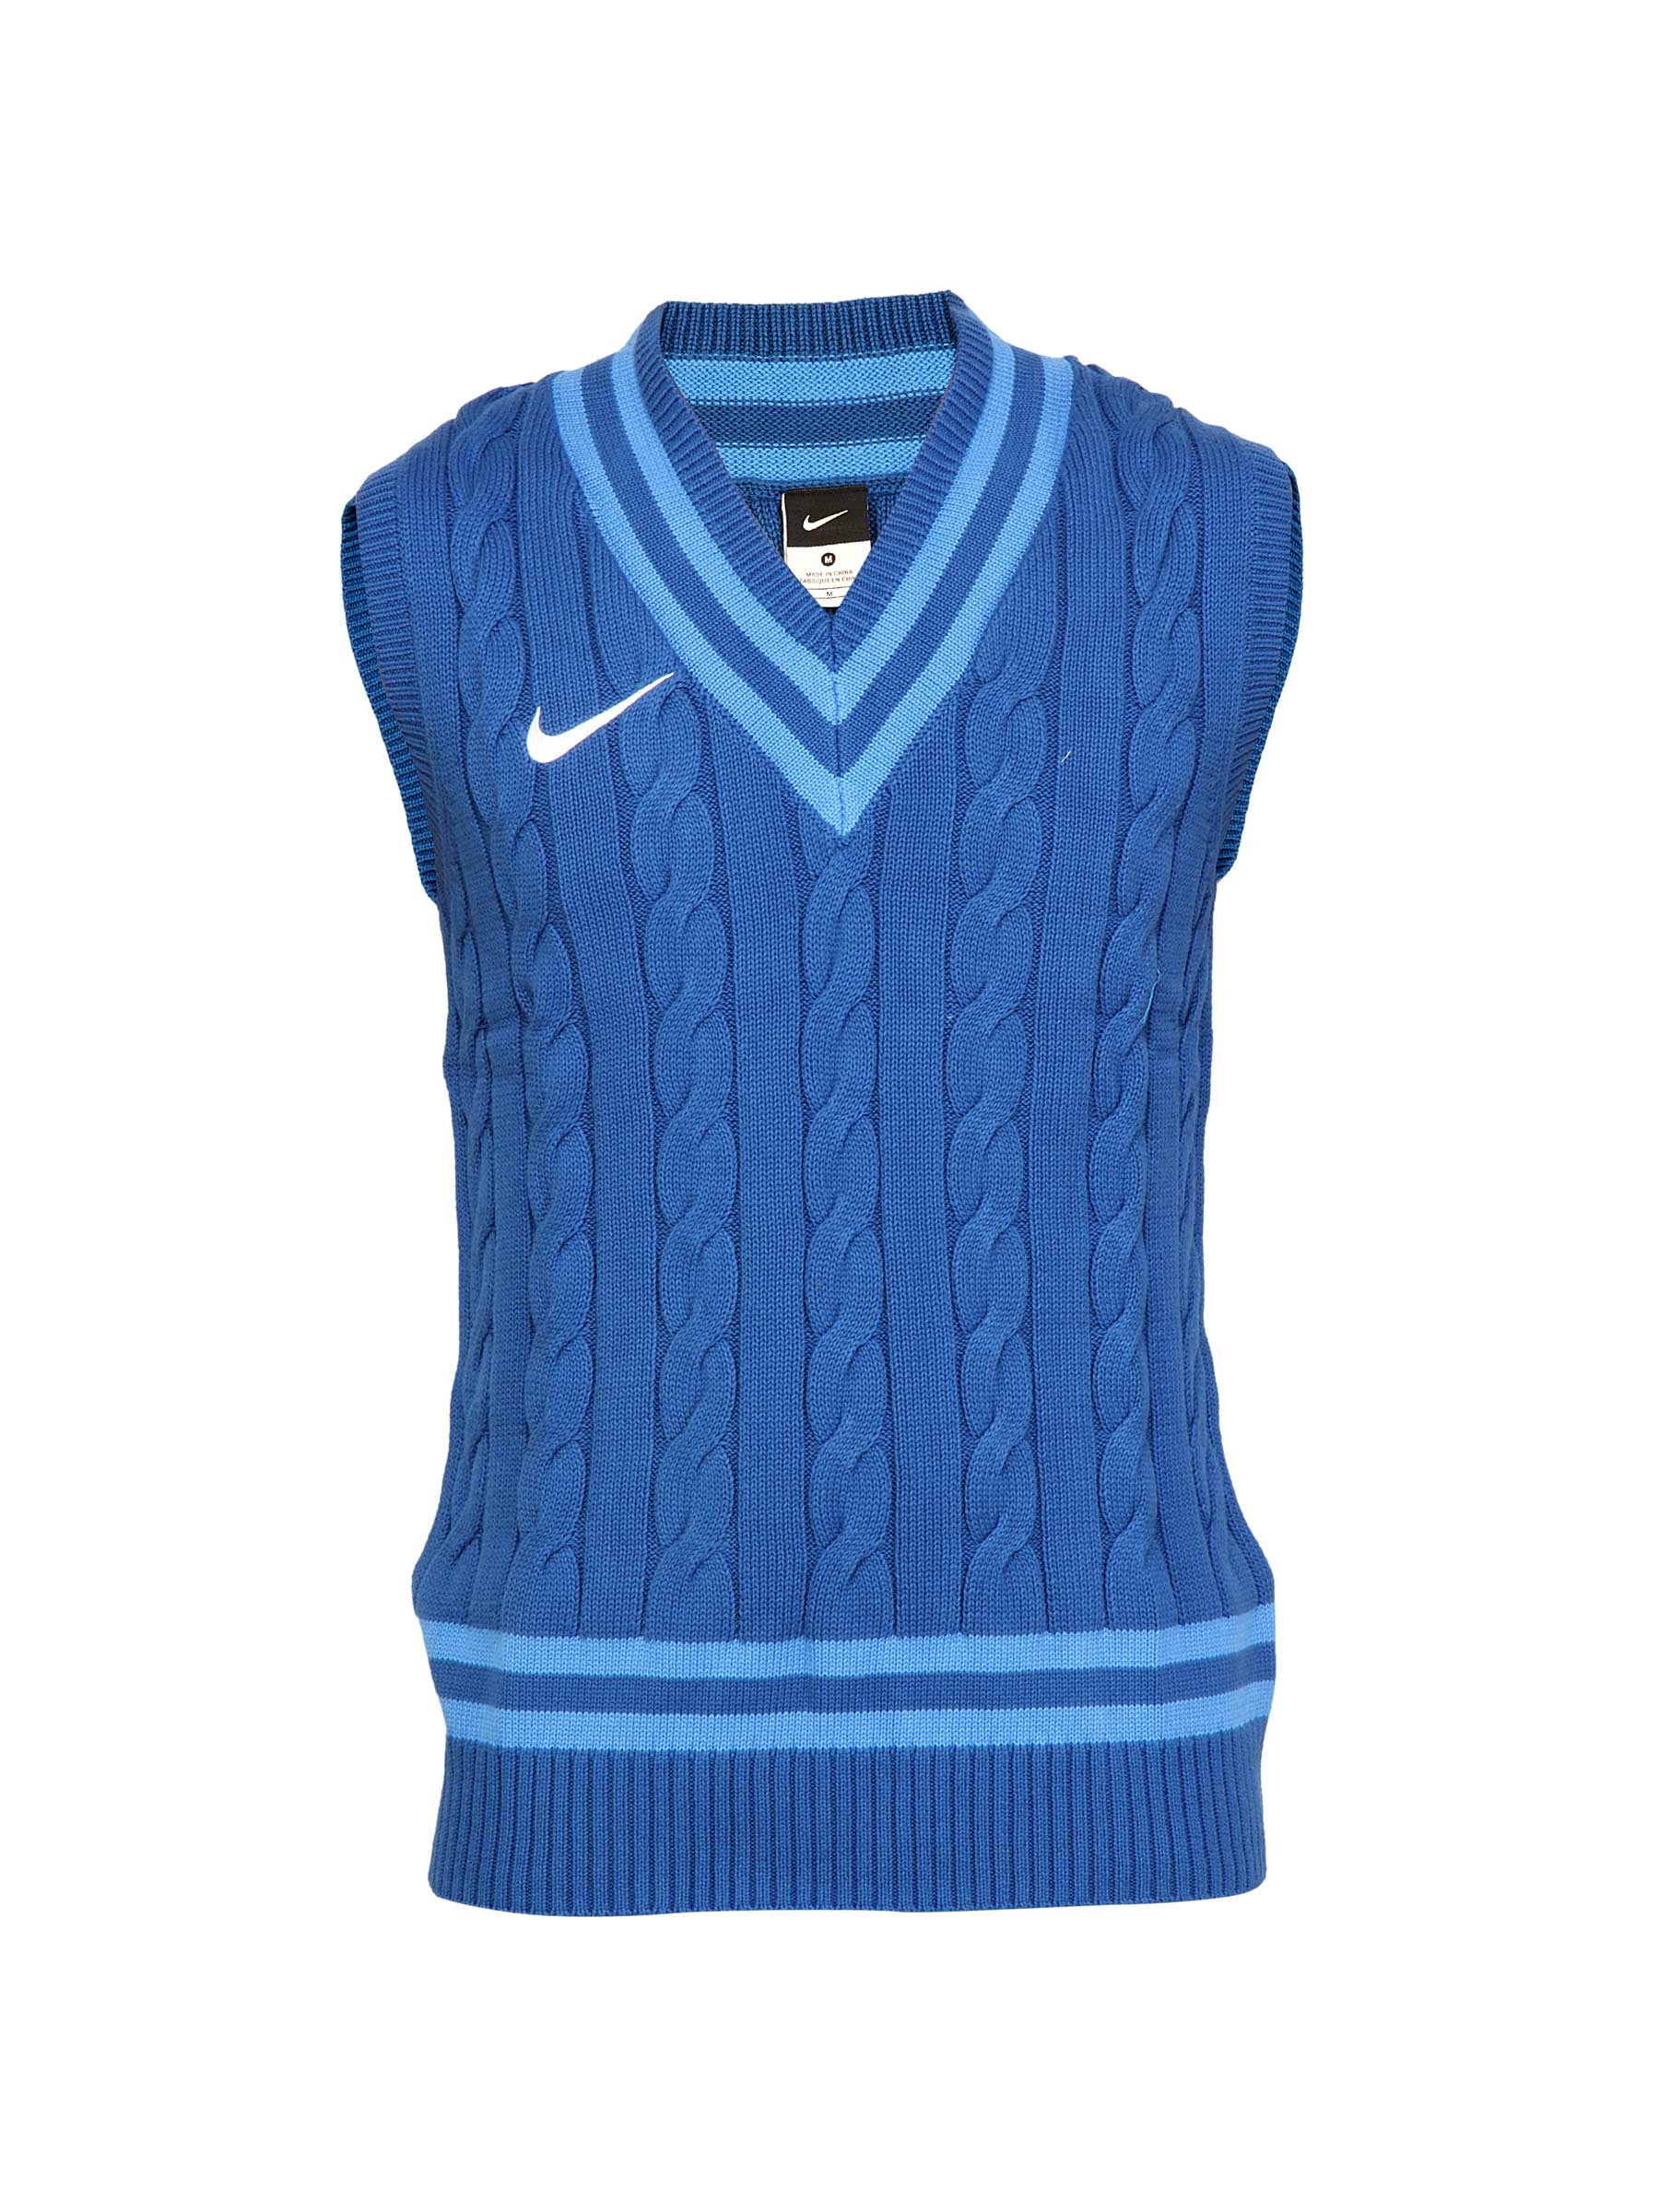 Nike Men Solid Blue Sweaters